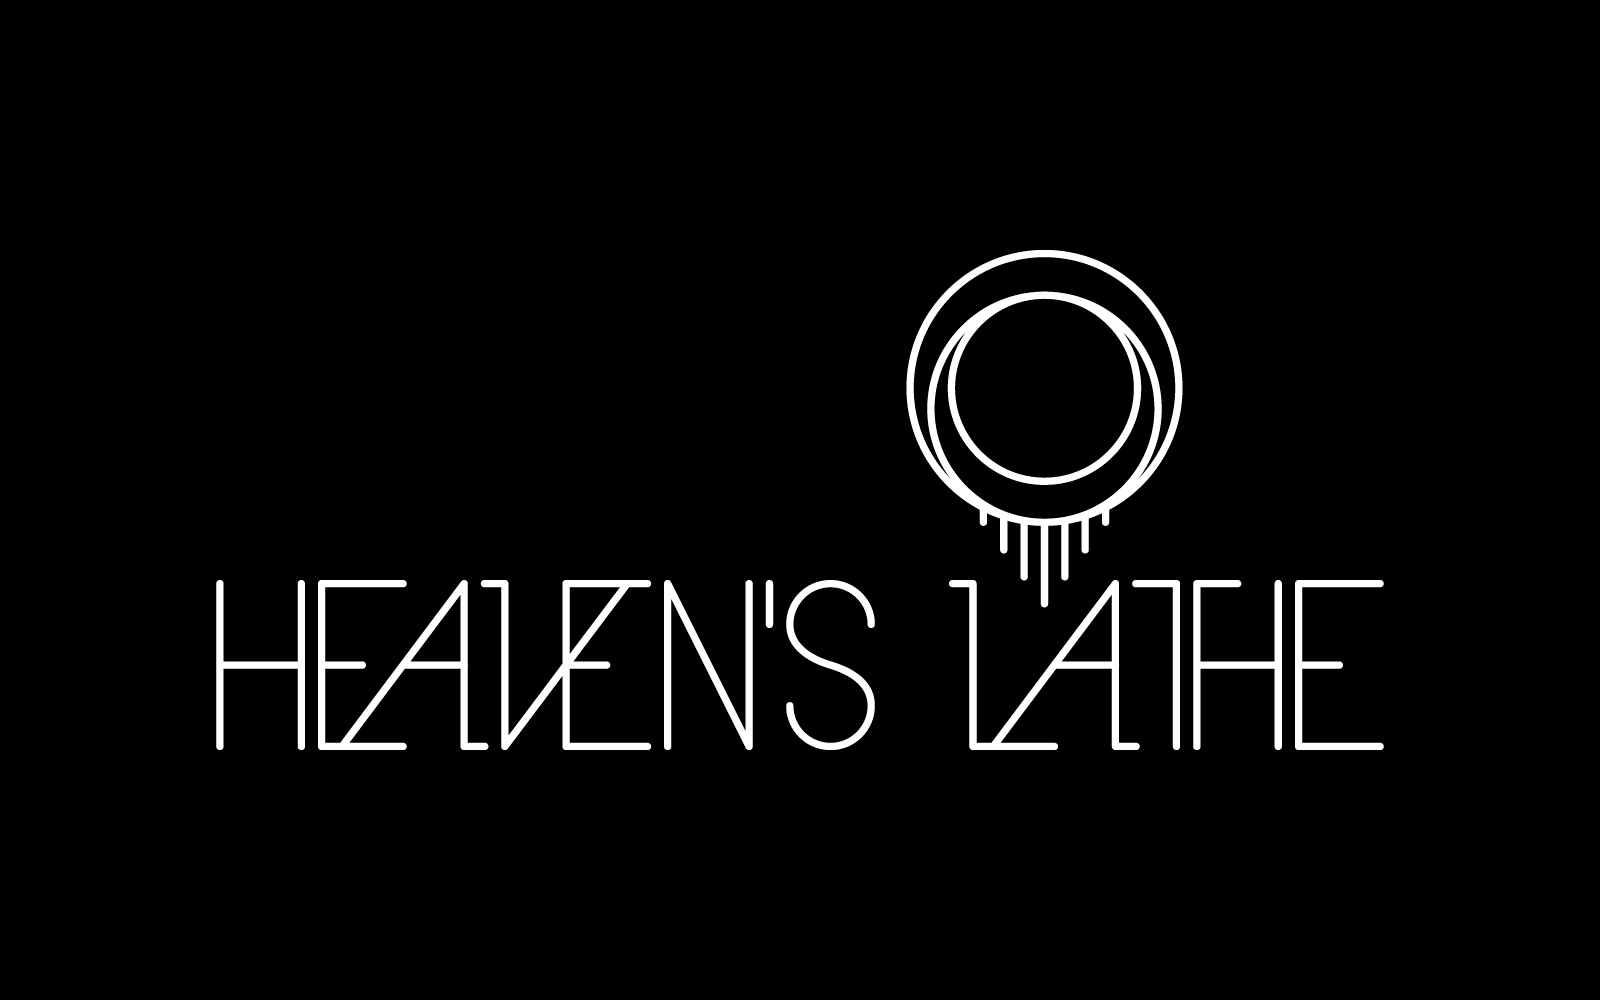 HEAVEN’S LATHE